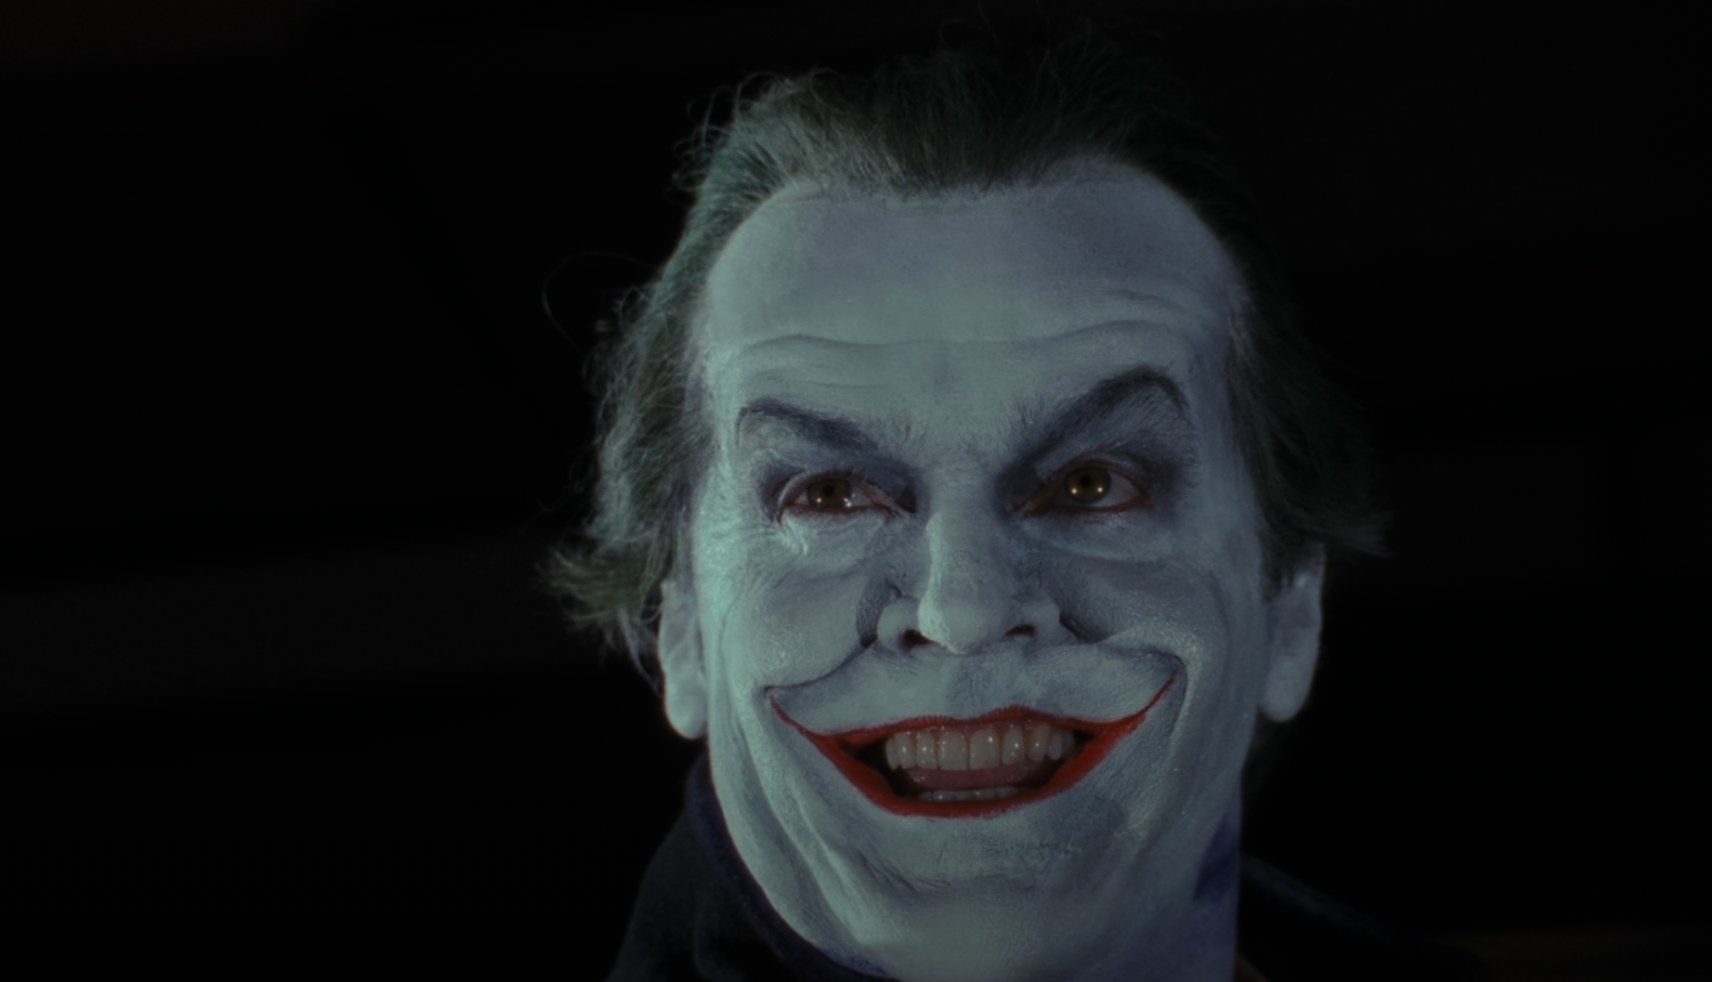 Jack Nicholson smiles as the Joker